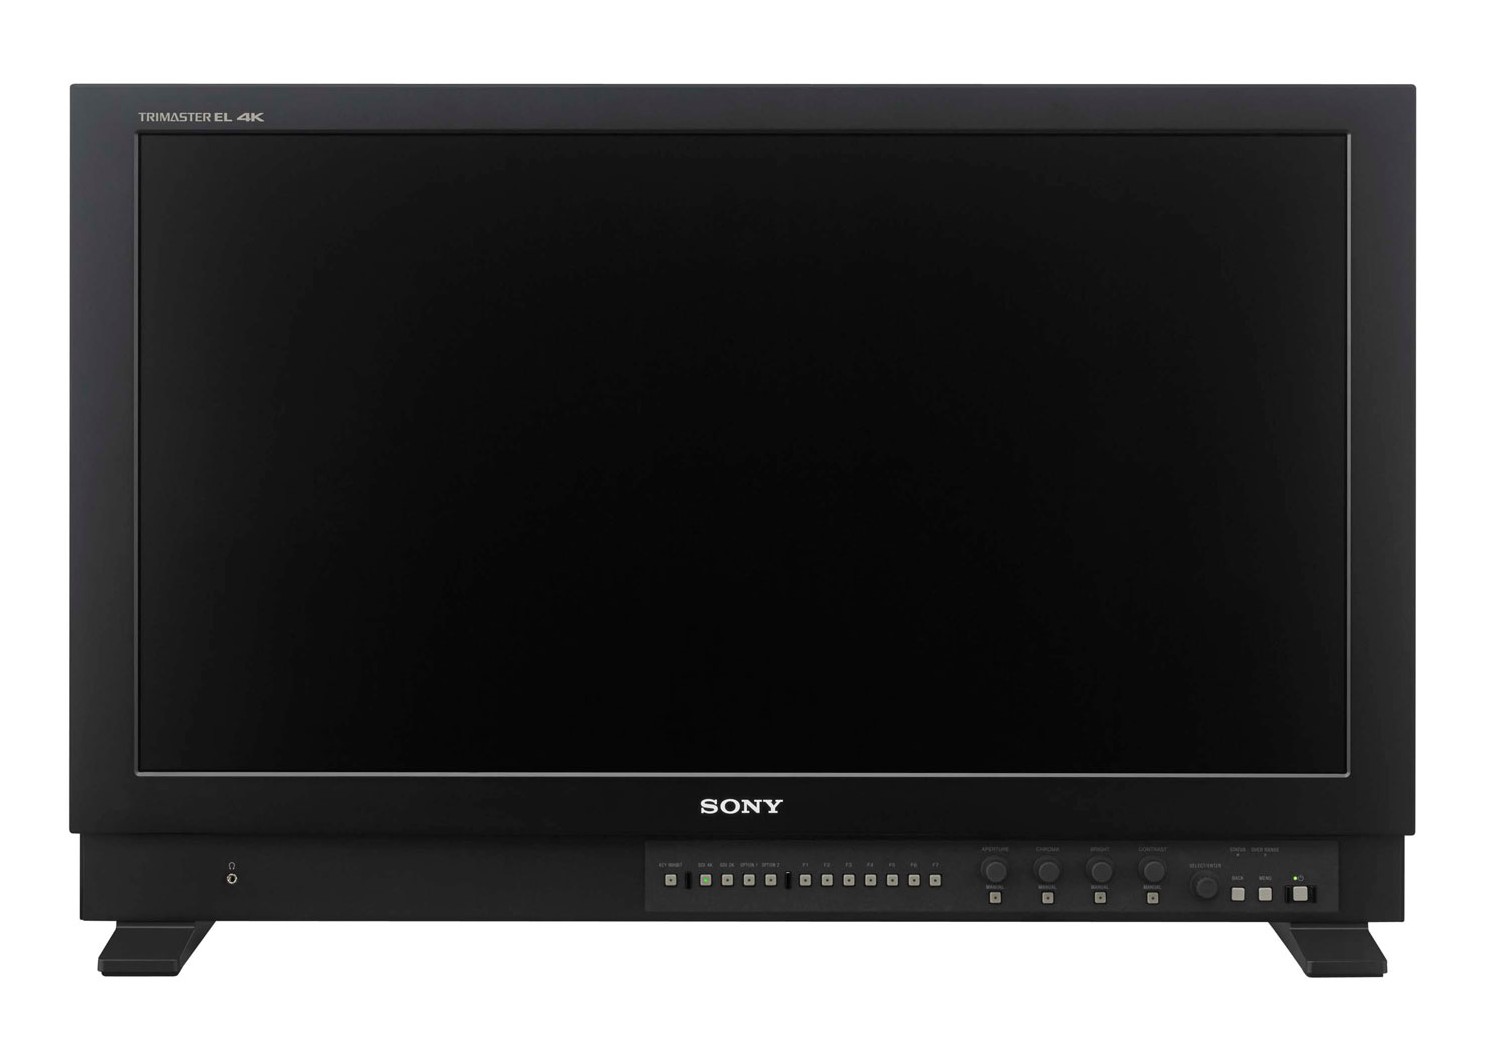 Sony's new BVM-X300 4K OLED master monitor